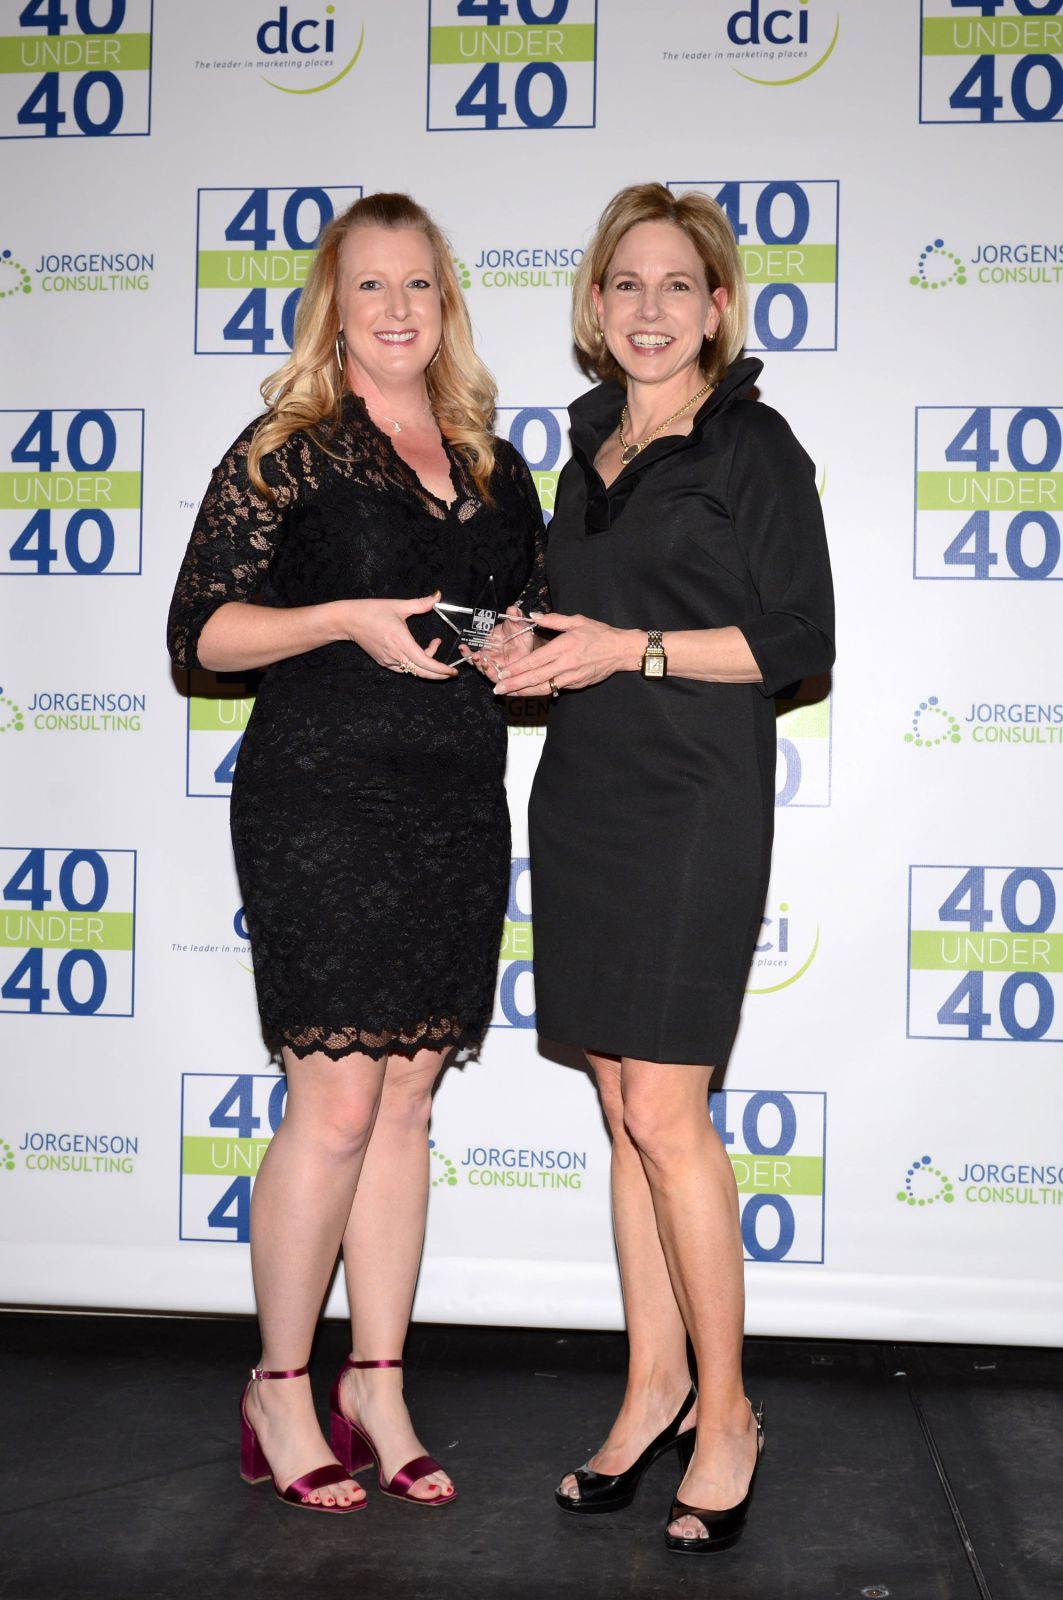 Shannon Landauer wins 40 Under 40 in Economic Development Award Main Photo